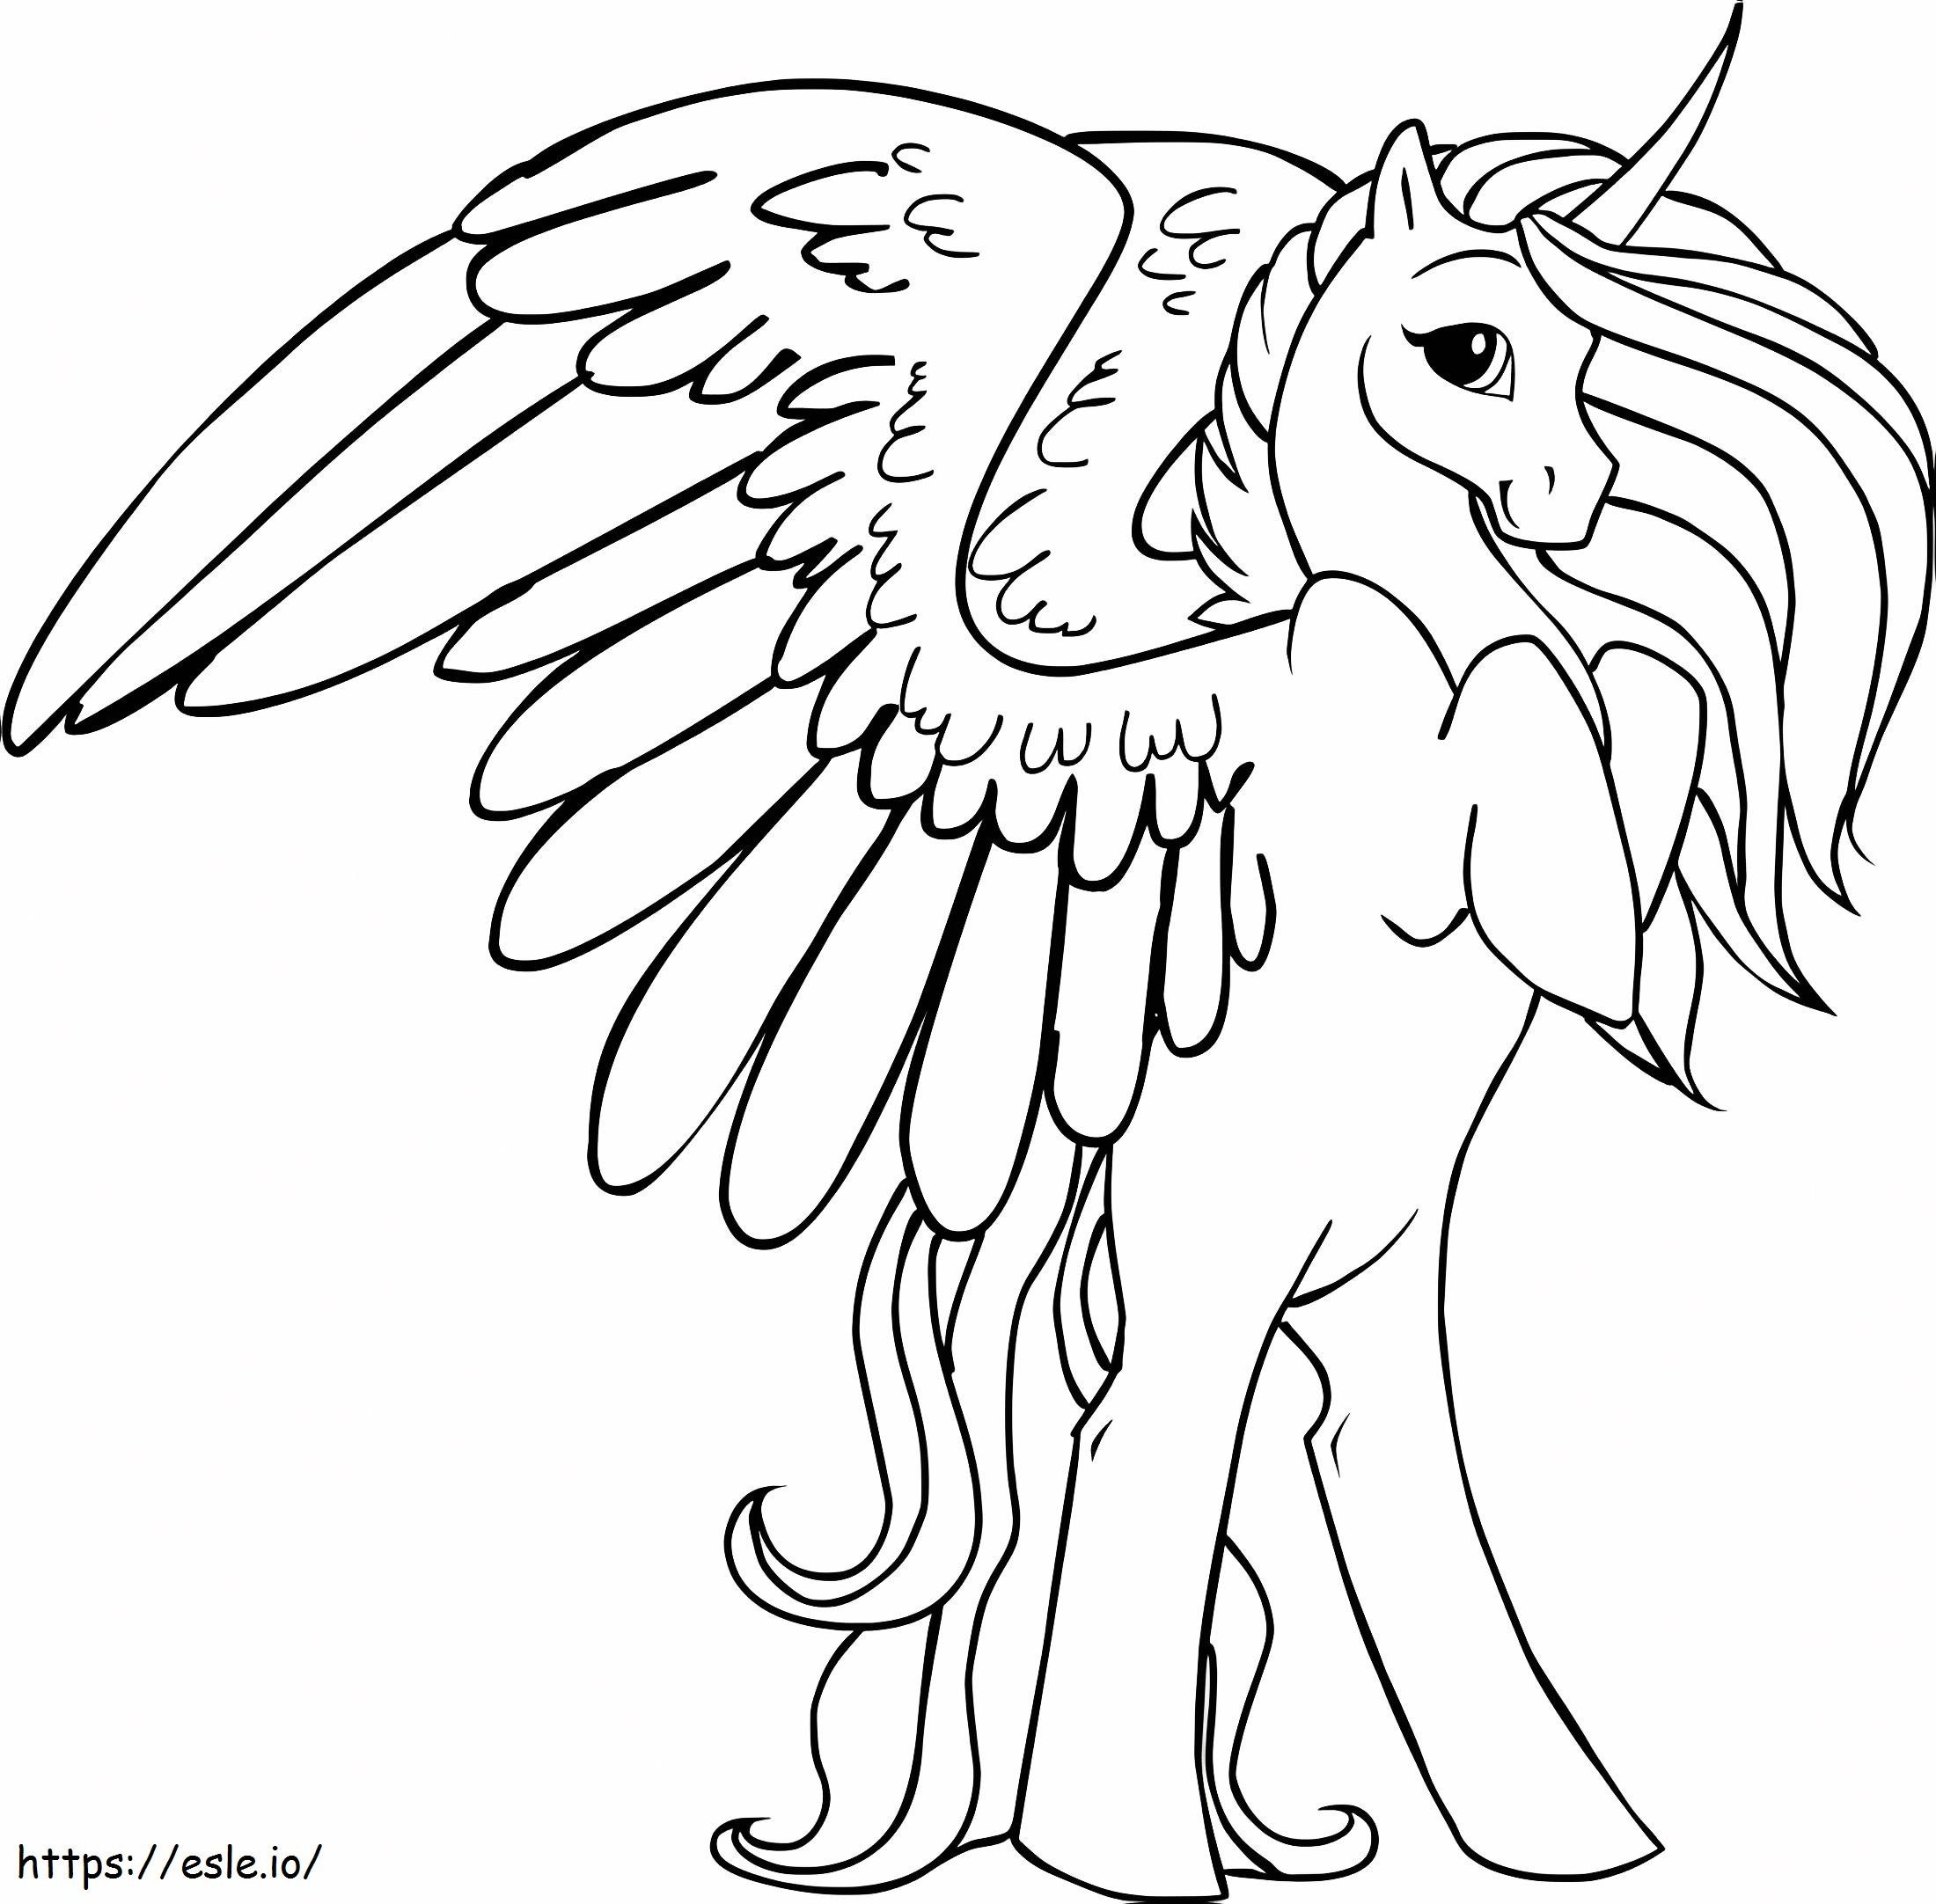 Beautiful Winged Unicorn coloring page